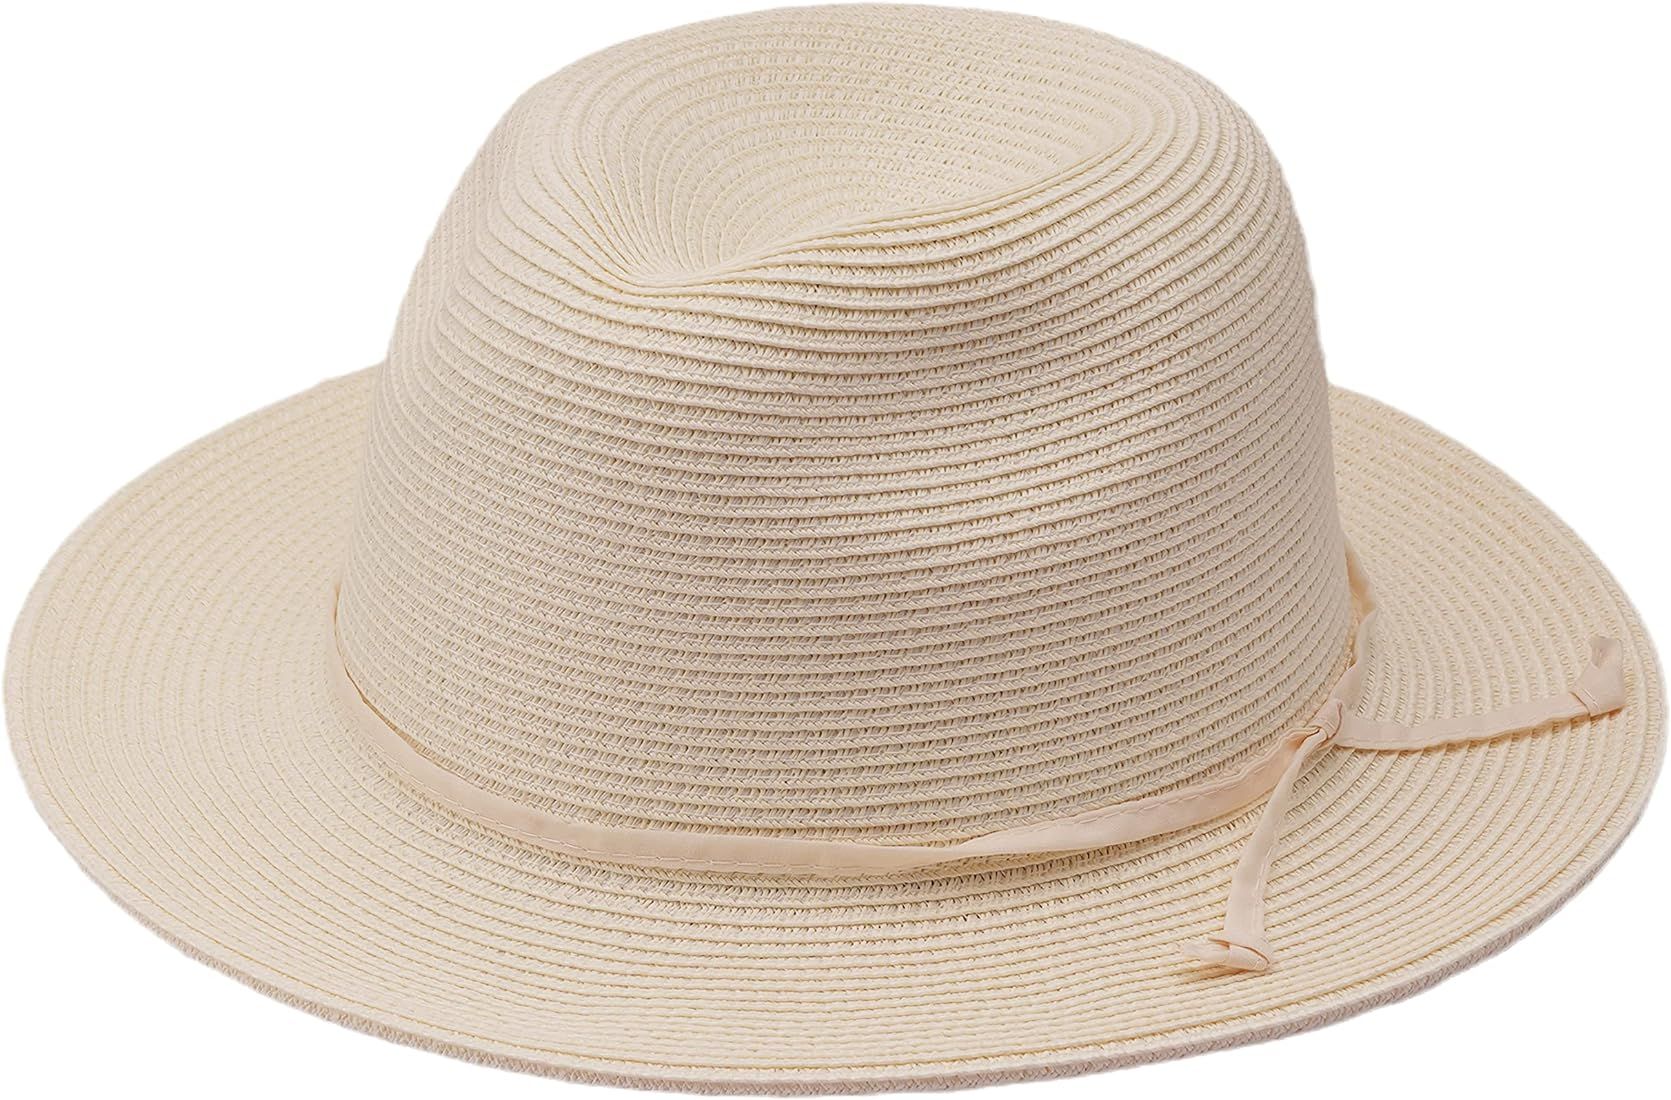 Joywant Womens Sun Fedora Hats for Women, Beach Straw Panama Hats with Wide Brim UPF 50+ | Amazon (US)